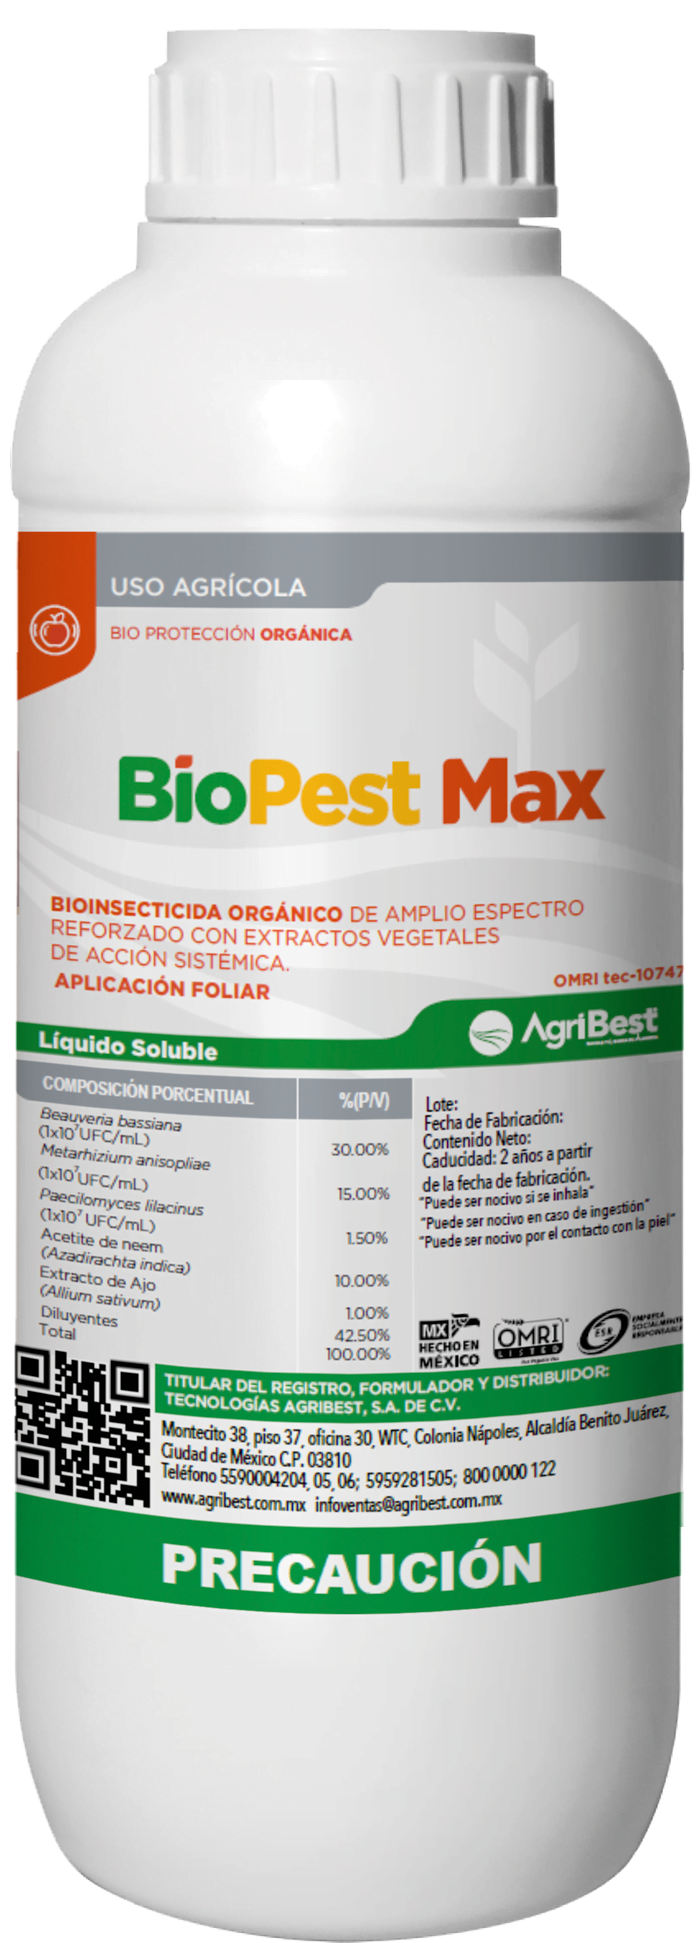 Botella BioPest 108x300 1